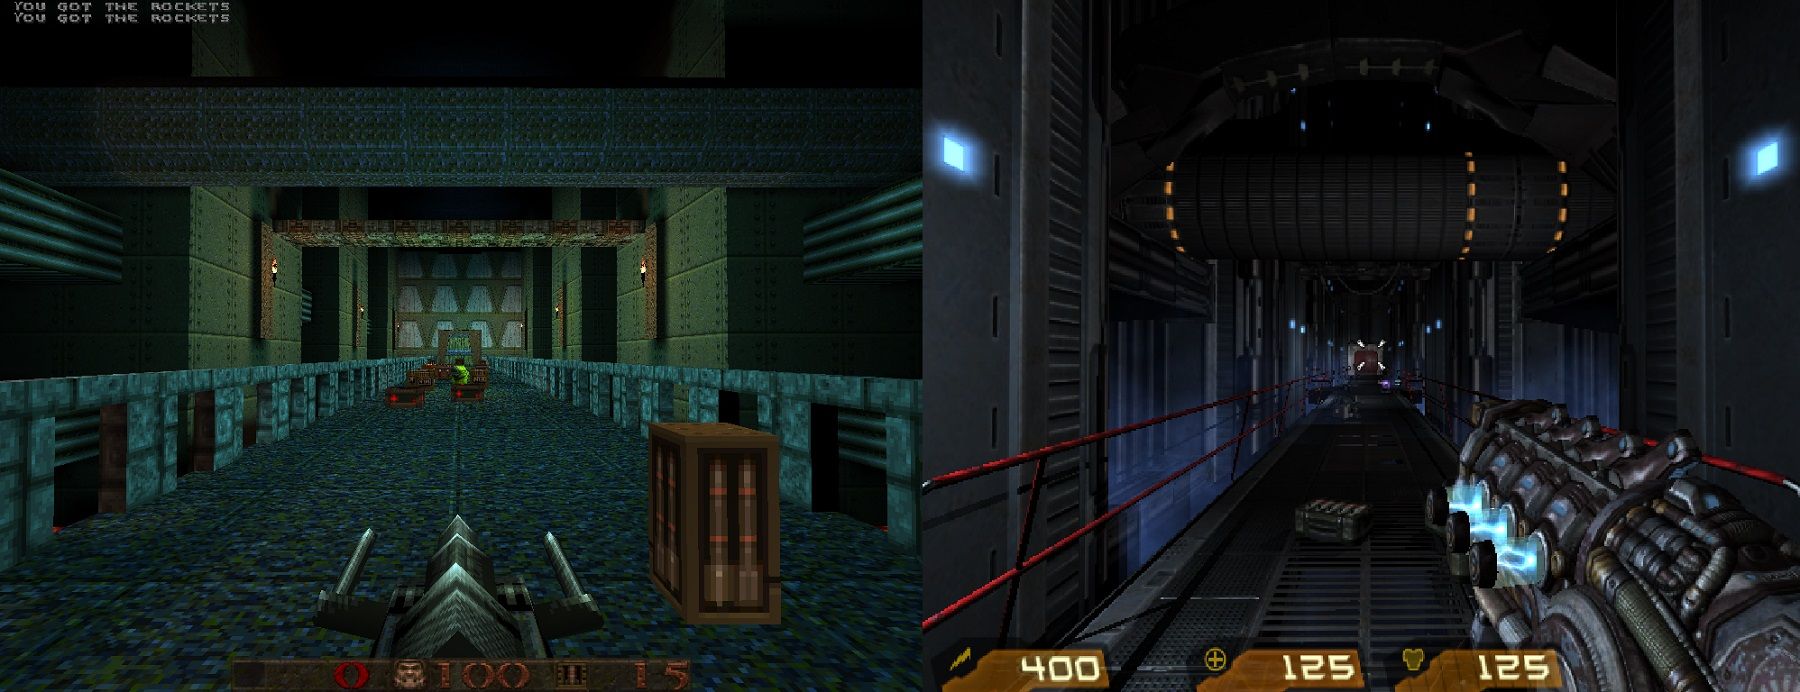 Screenshot comparing Quake 4 with the "Infernal Stroggos" Quake 1 mod on the left.